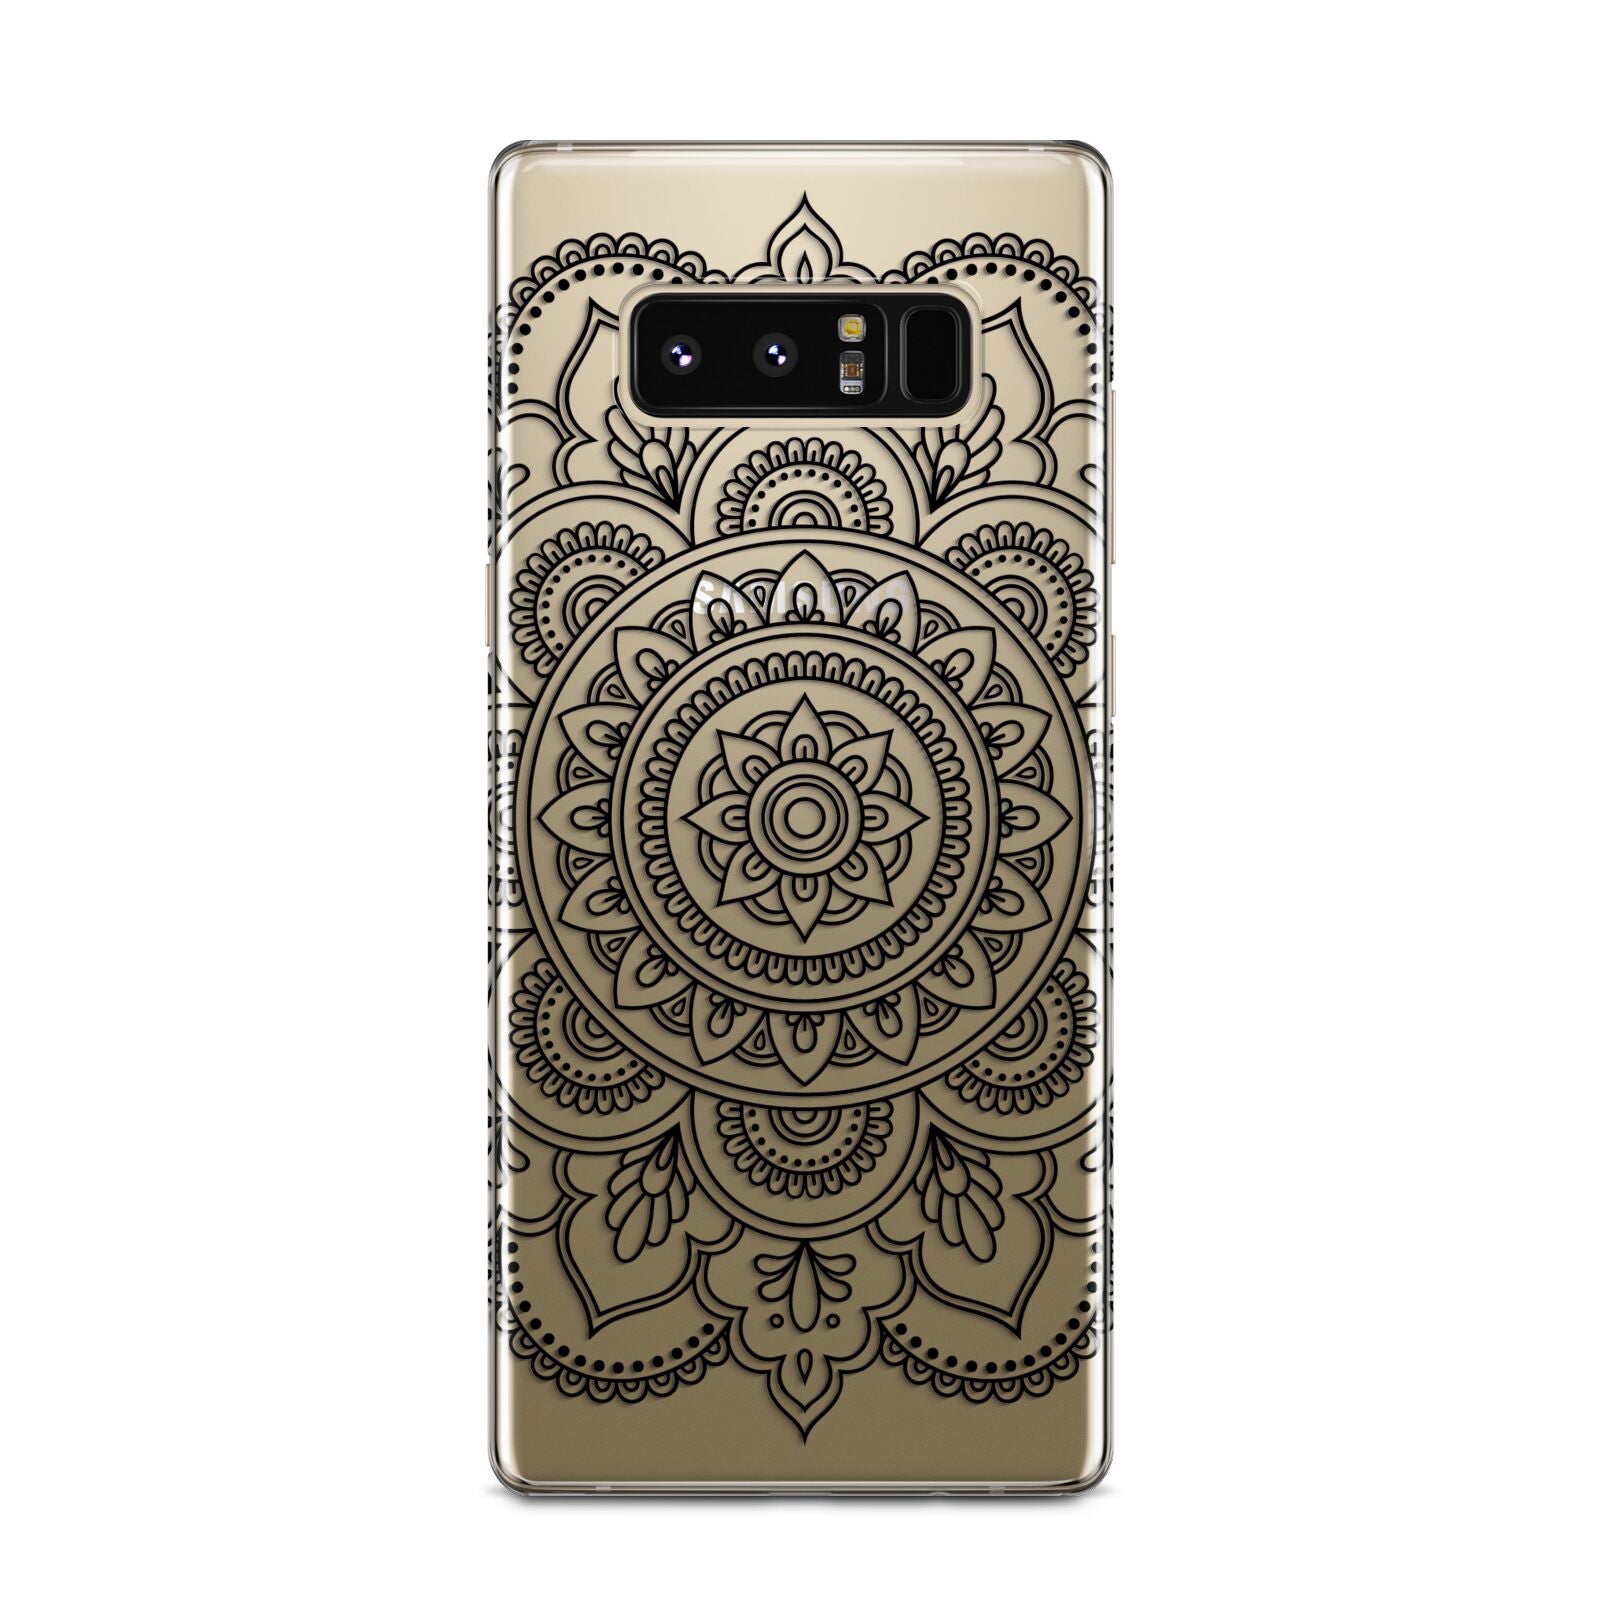 Mandala Samsung Galaxy Note 8 Case